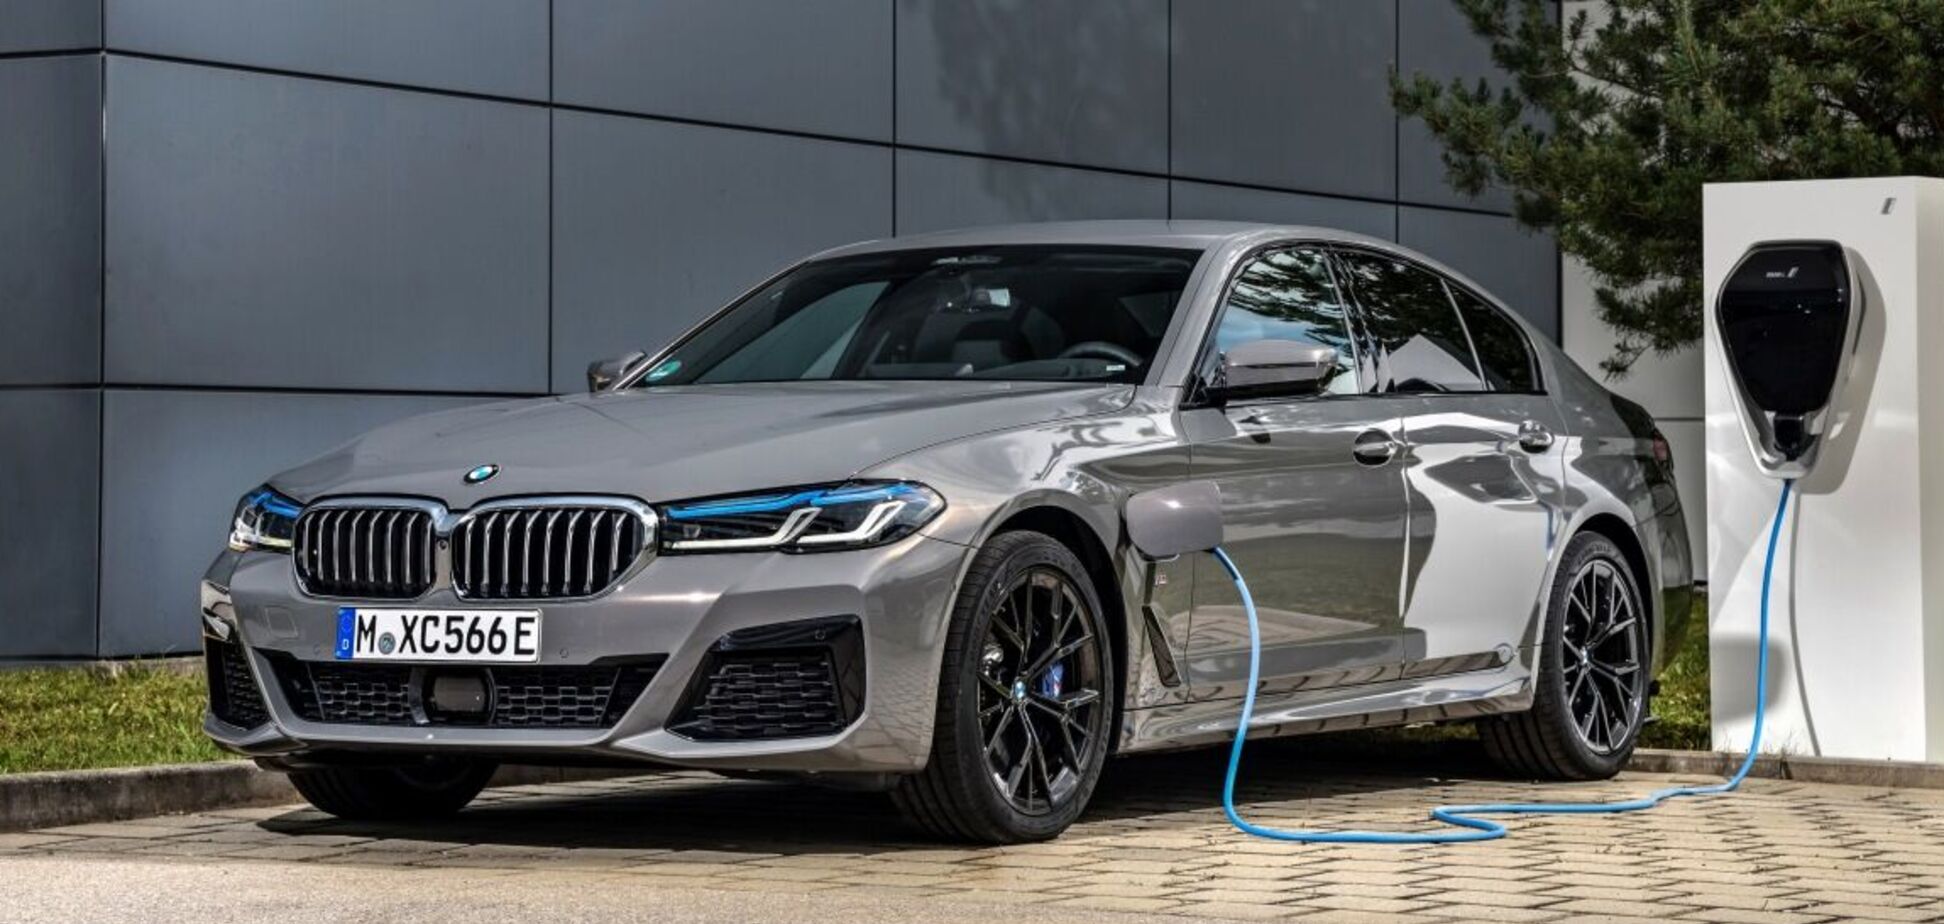 Гибрид BMW 5 Series удивил низким расходом топлива. Фото: BMW